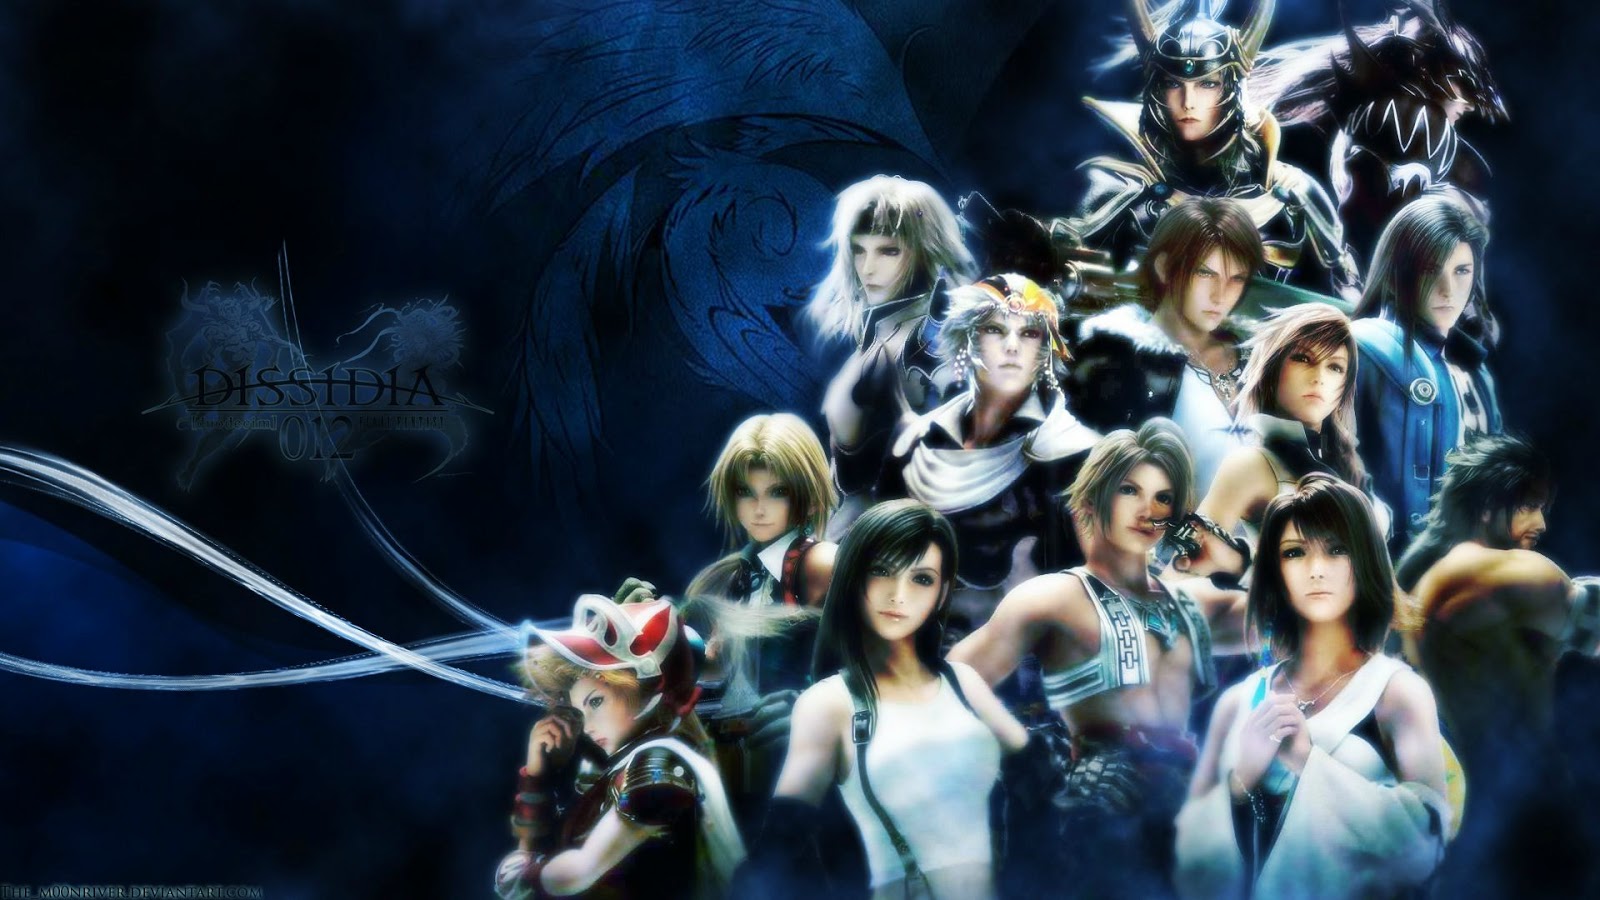 Free PSP Themes Wallpaper: Final Fantasy PSP wallpaper - Final Fantasy ...